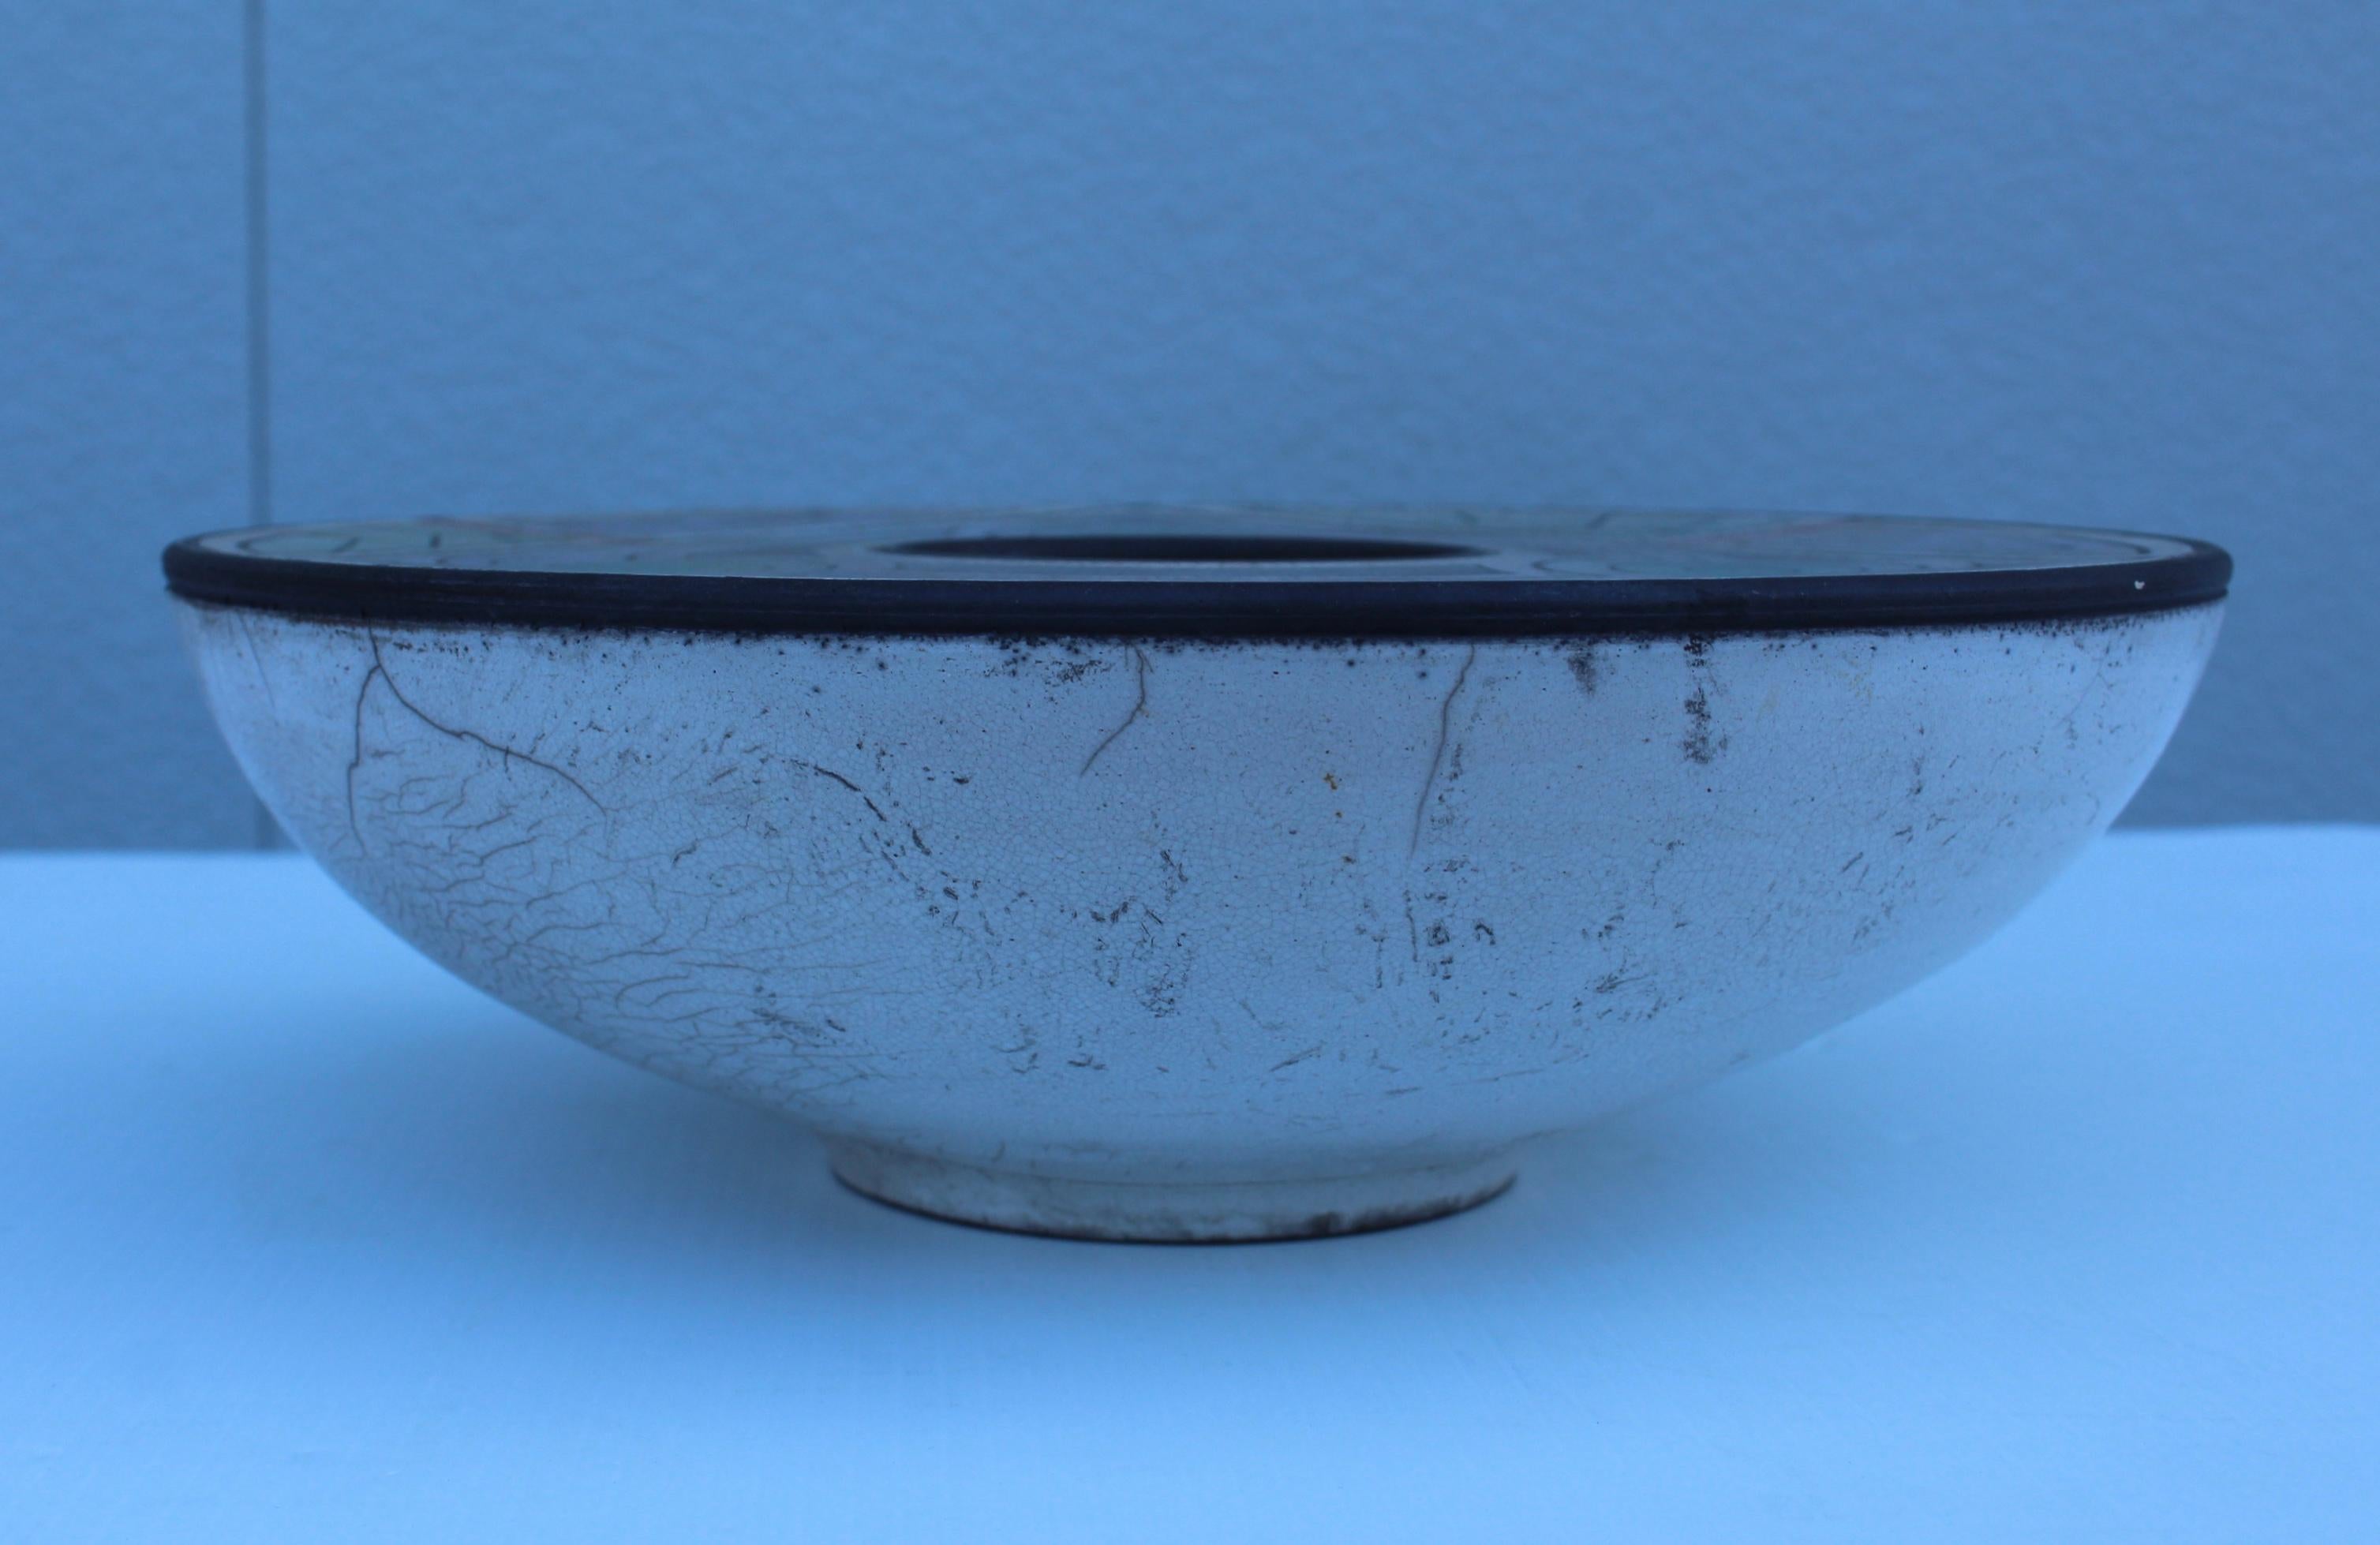 1980s Raku ceramic Memphis style bowl with gold leaf interior by Gerald Hong.